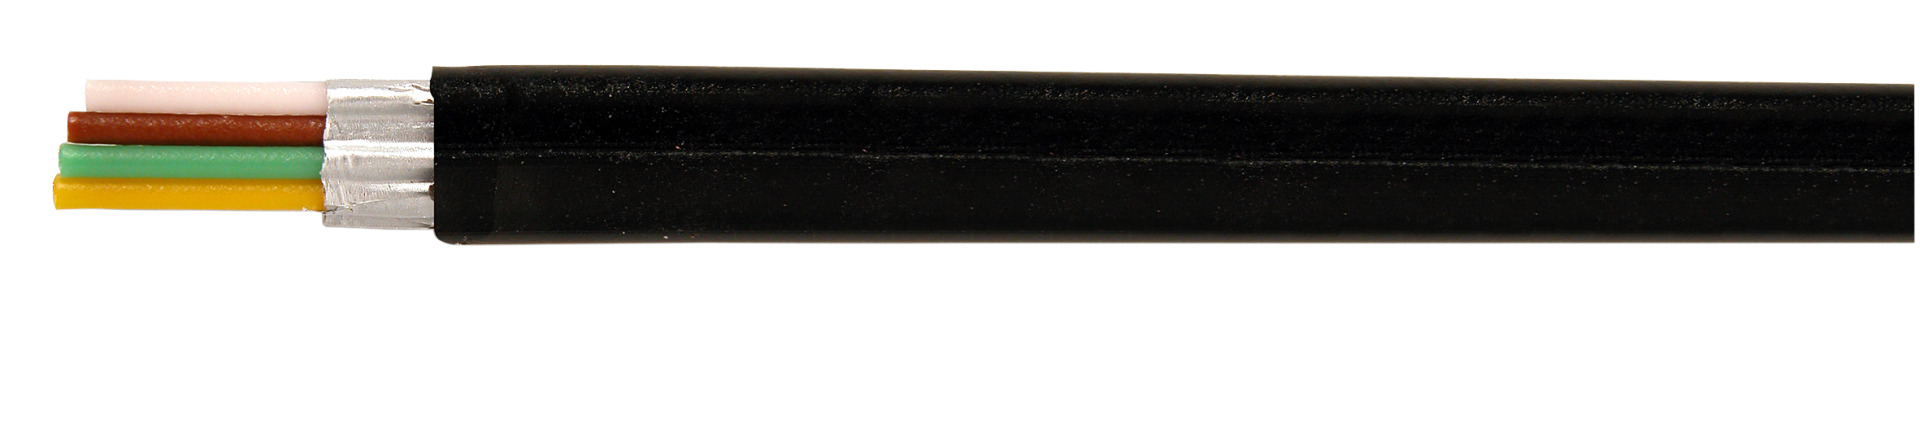 Modular Flat Cable 6-pole shielded, black, 100 m reel